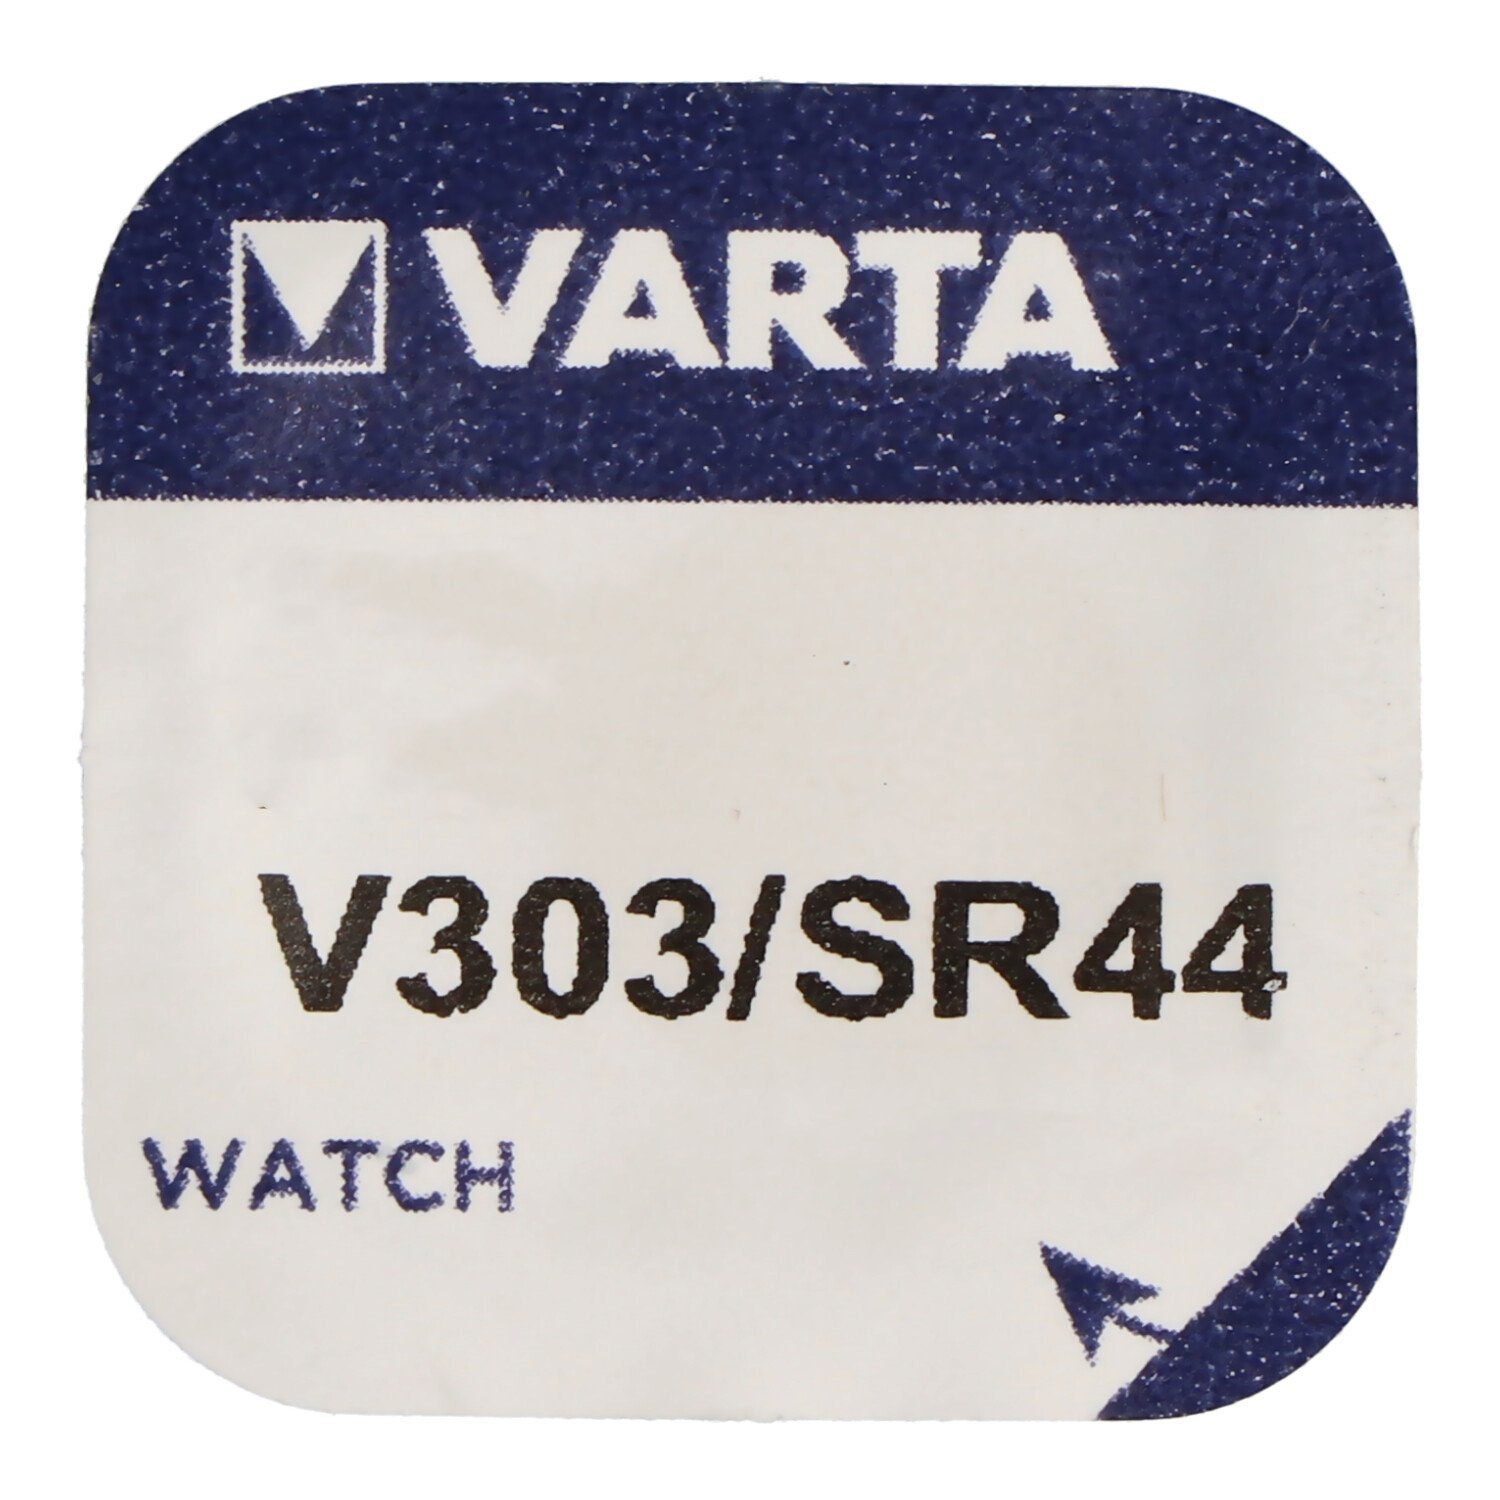 SR44SW 303, Varta VARTA für etc. SR44, Uhren Knopfzelle, V303, V) (1,6 Knopfzelle